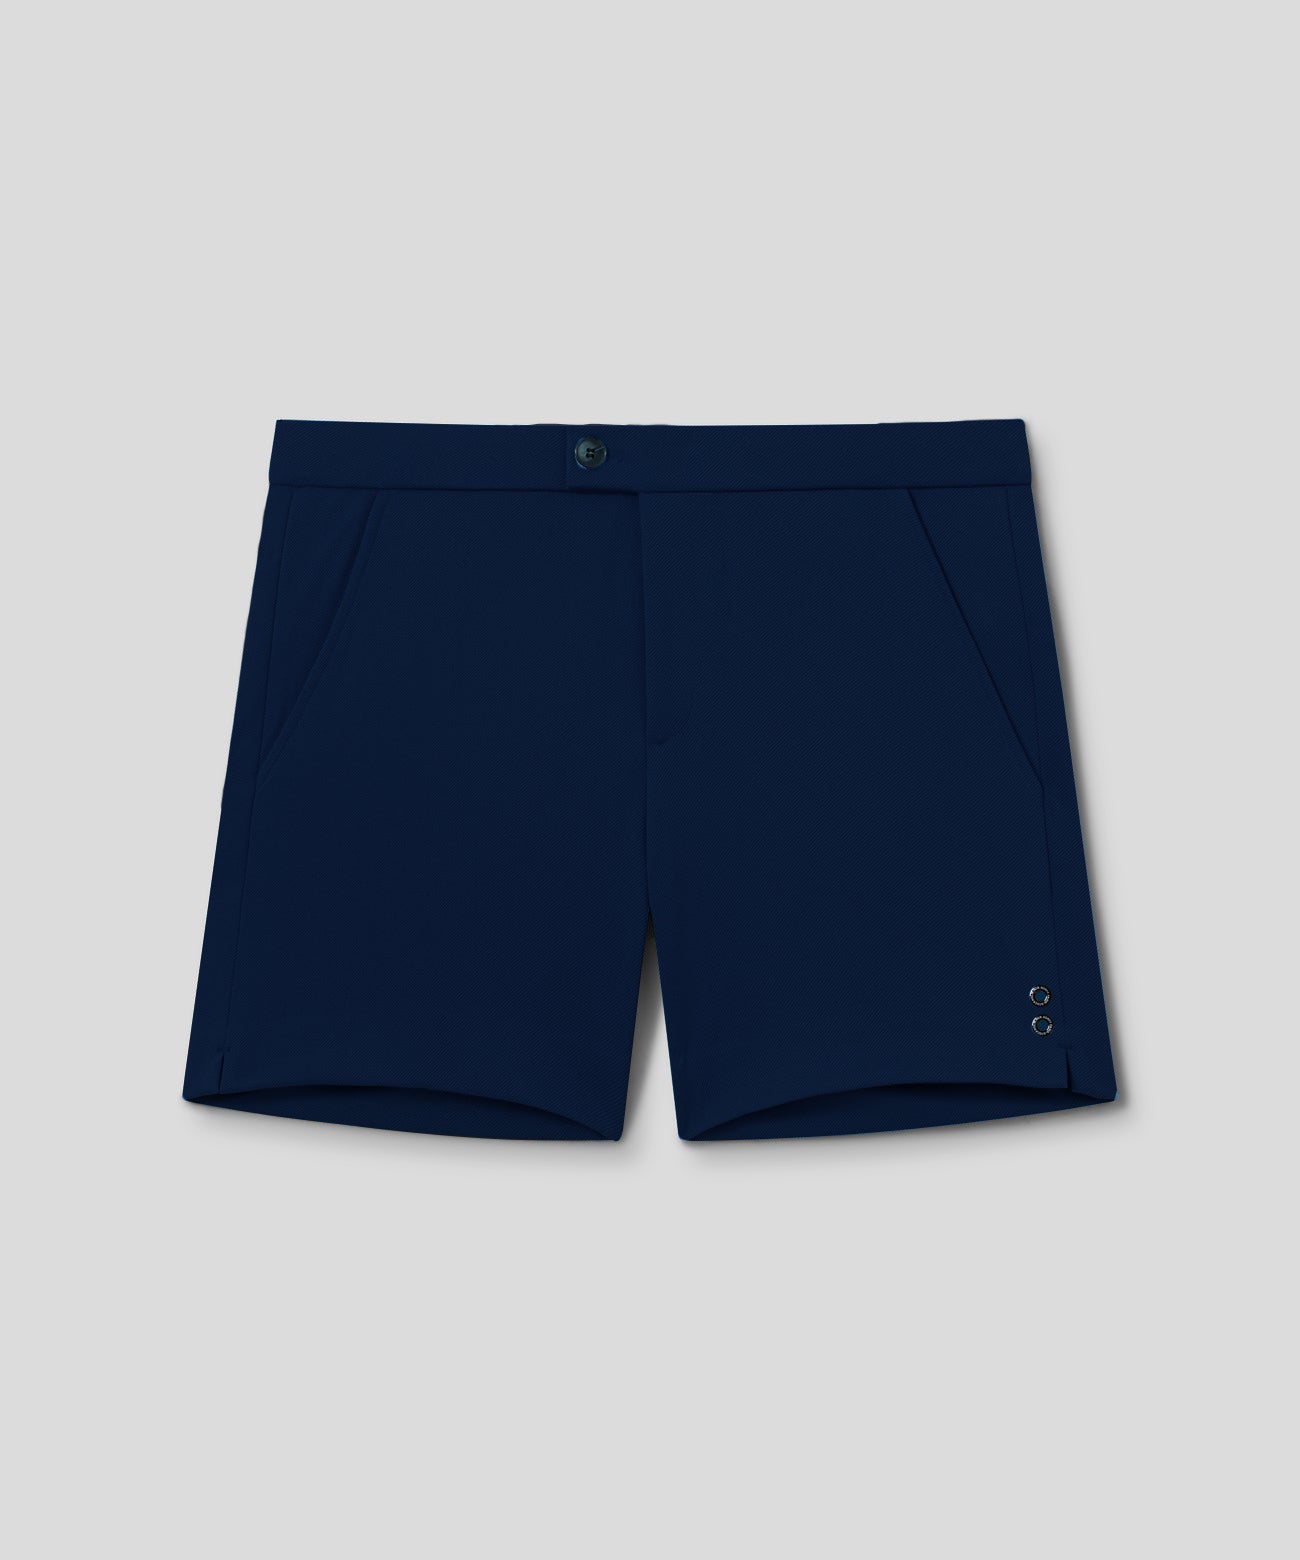 Tennis Shorts: Navy